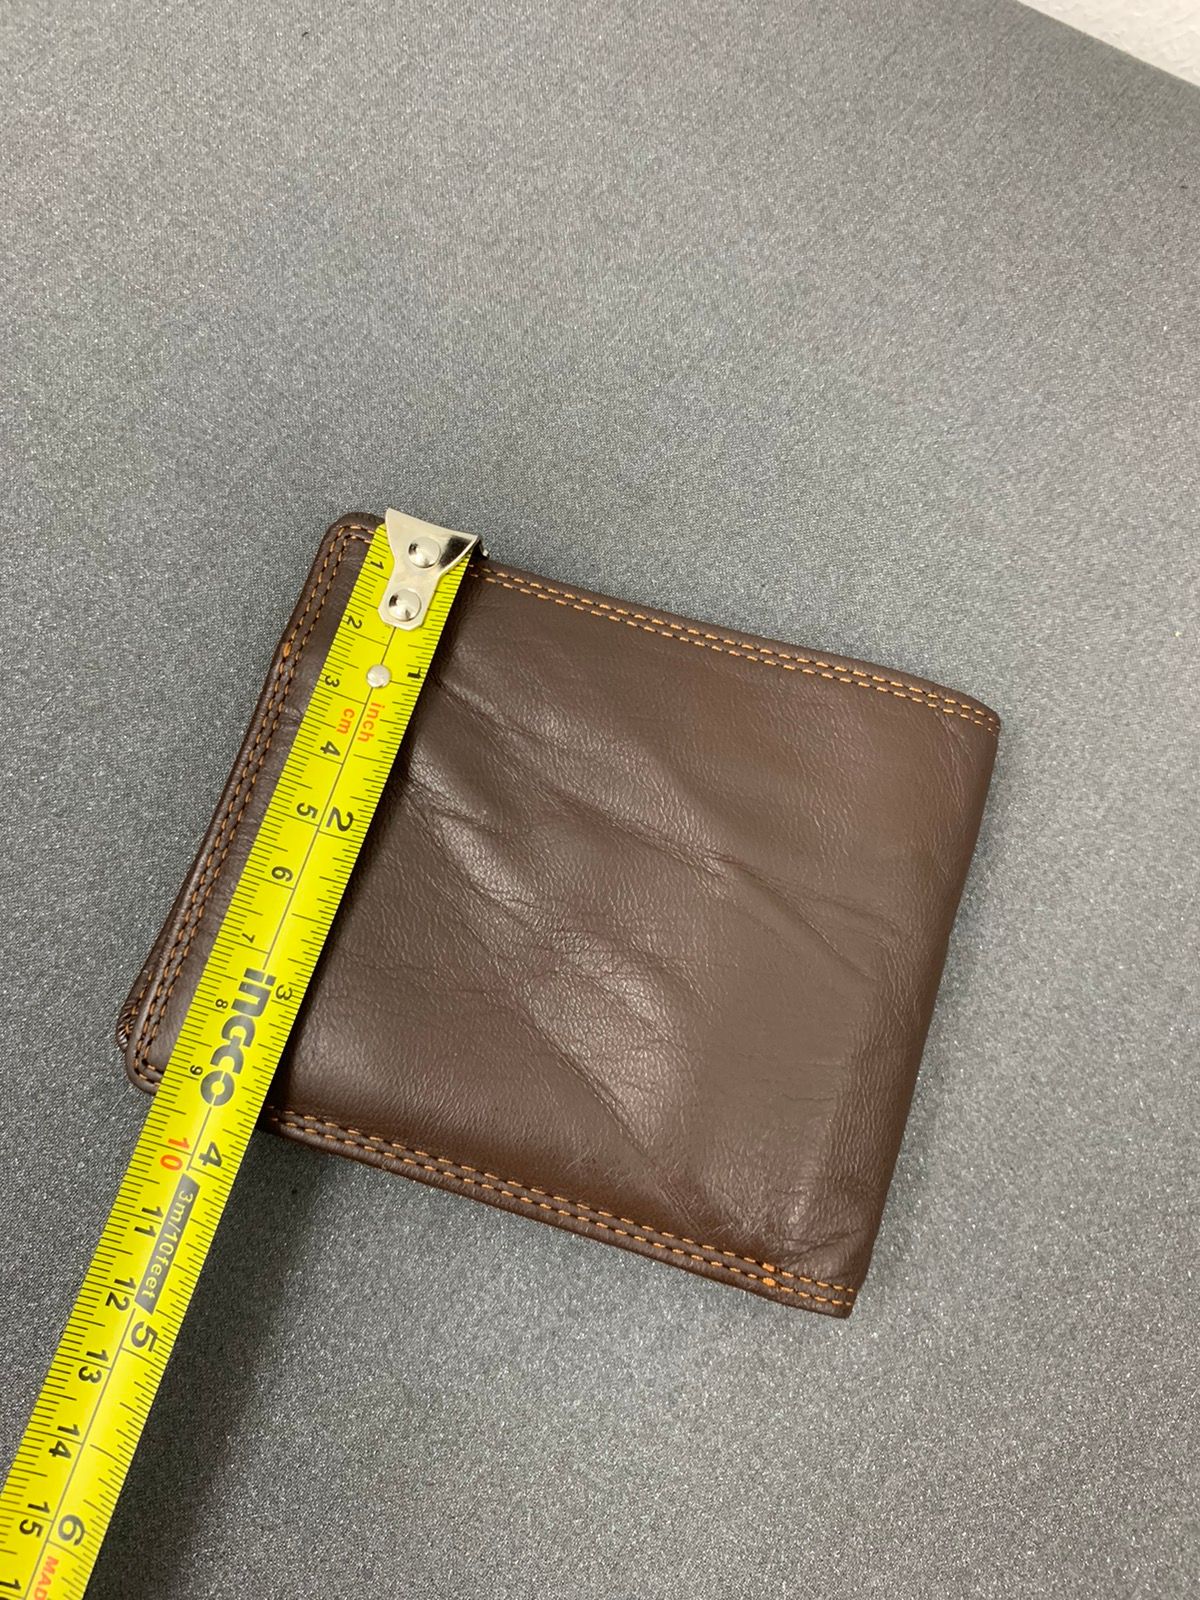 JapaneseBrand Kansai Yamamoto Leather Wallet - 7